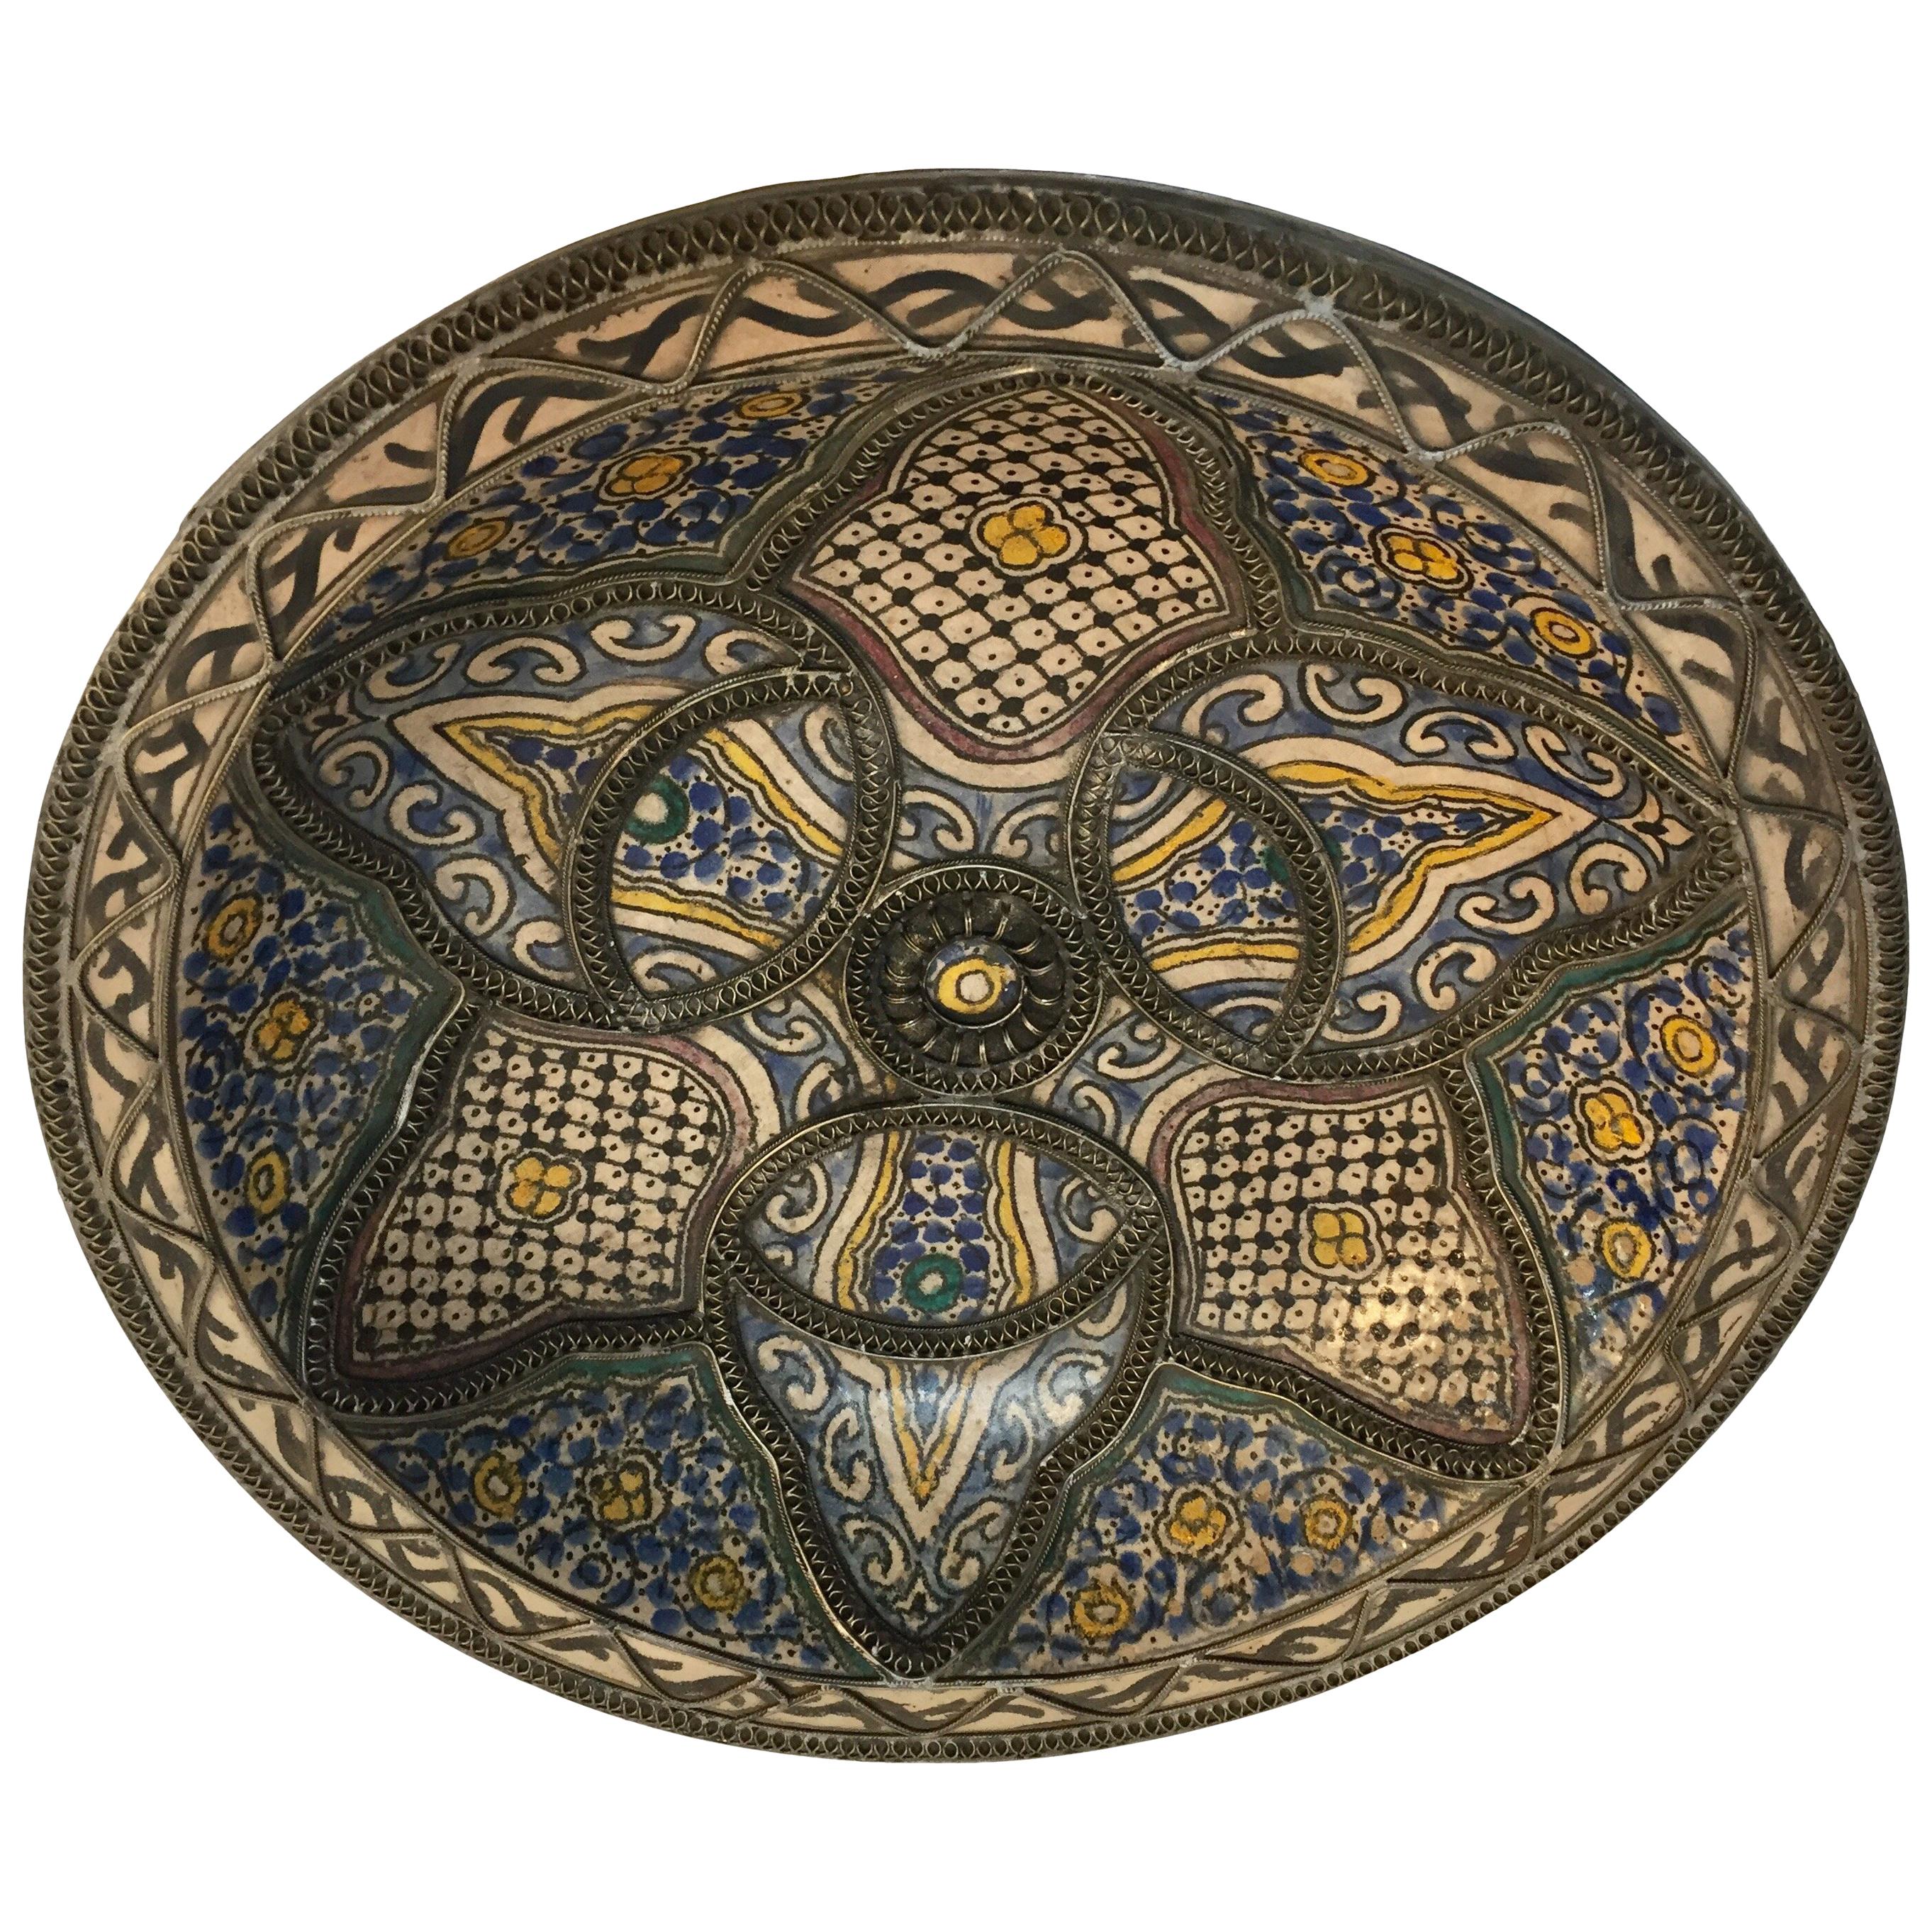 Moorish Ceramic Bowl Adorned with Silver Filigree from Fez Morocco